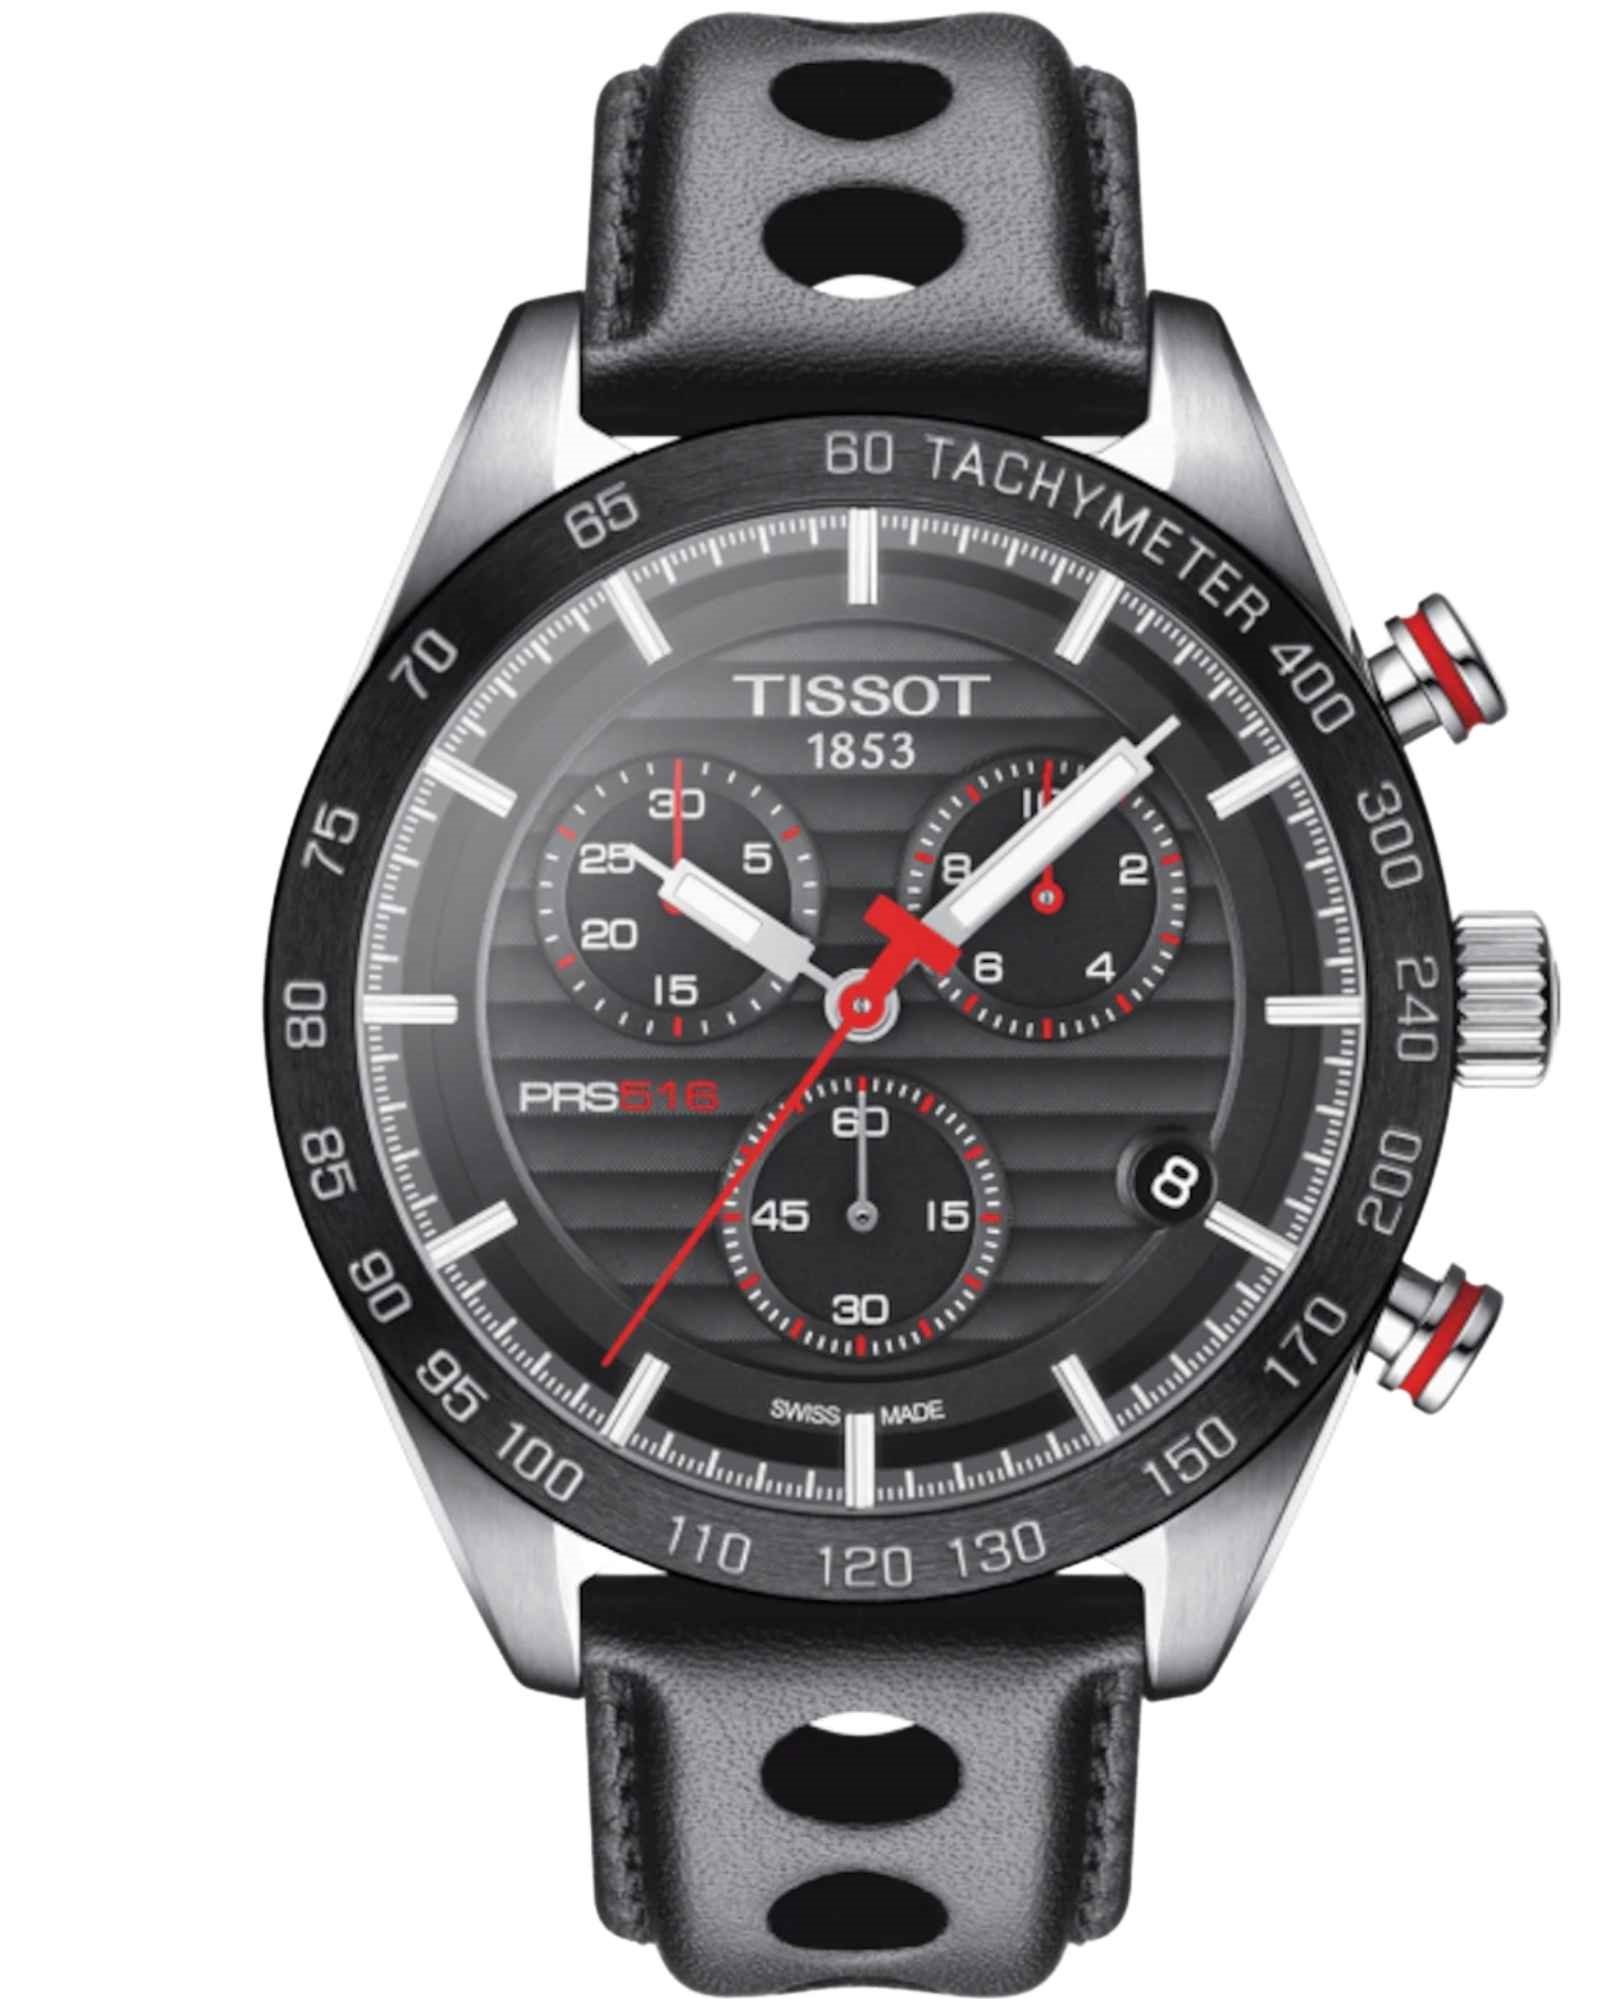 Relógio Tissot T100.417.16.051.00 PRS 516 Cronógrafo Preto